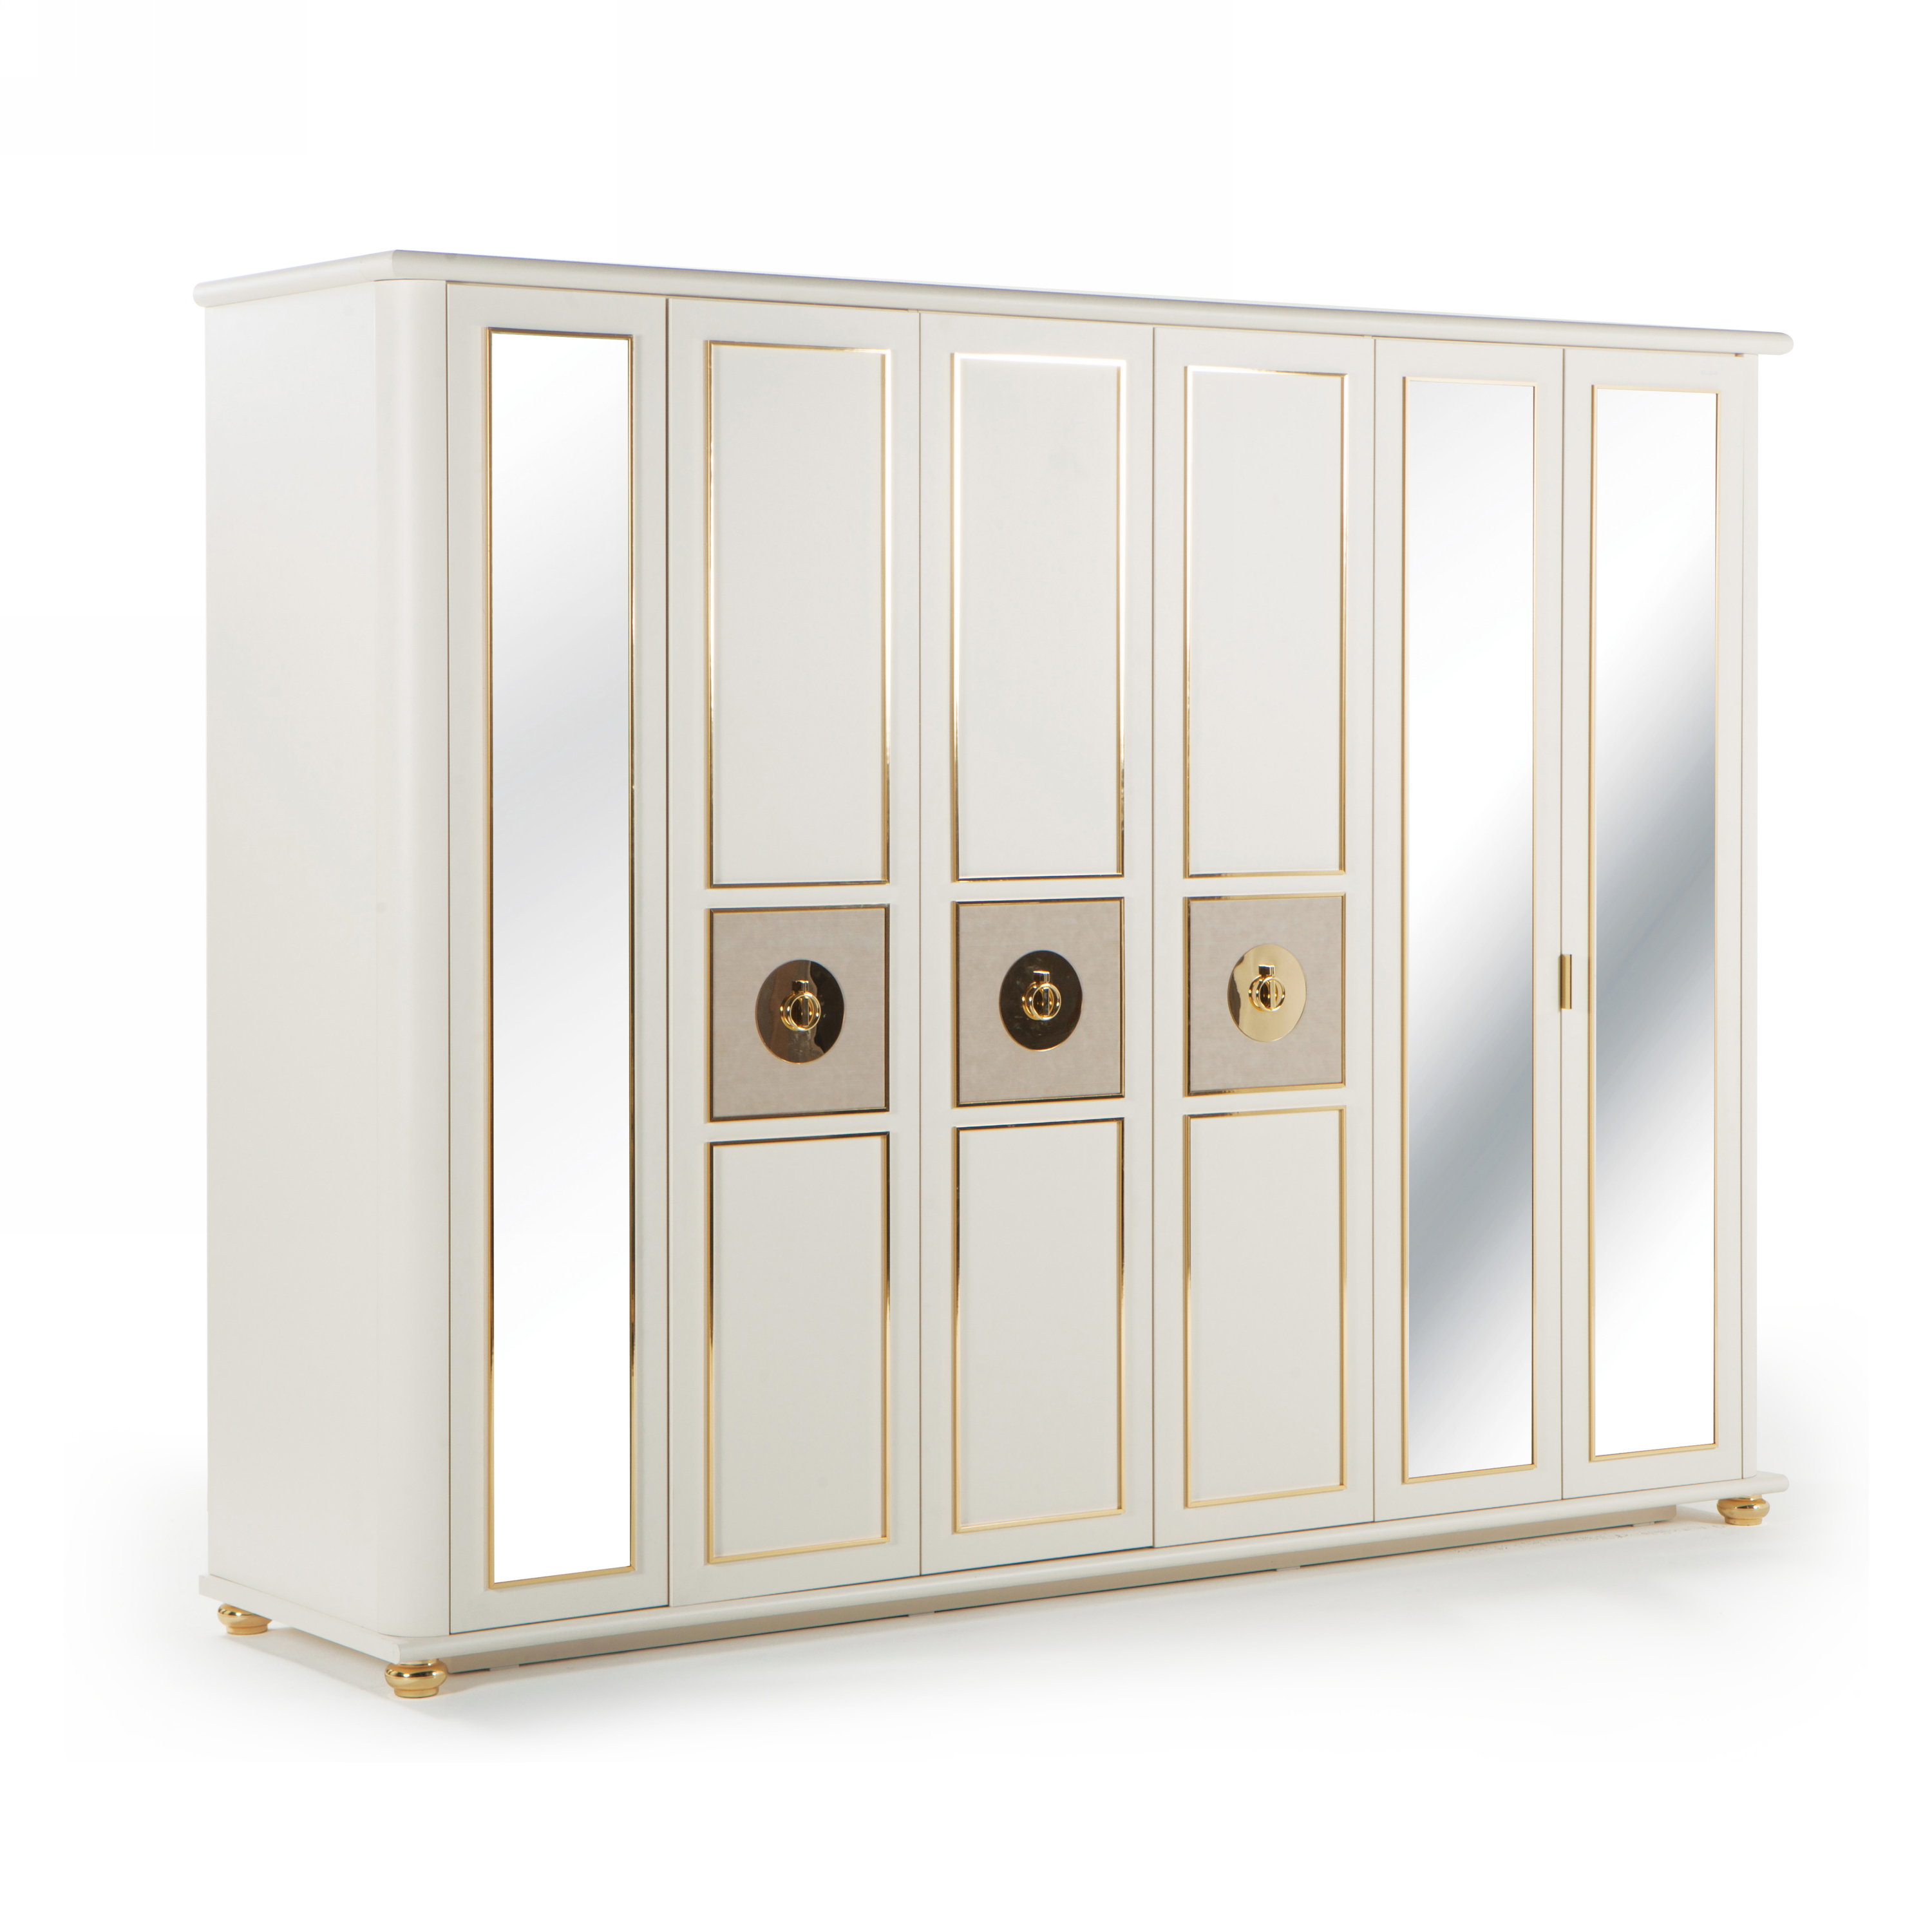 Шкаф платяной Bellona Mistral, 6-ти дверный, размер 274х68х210 см (MIST-34)MIST-3